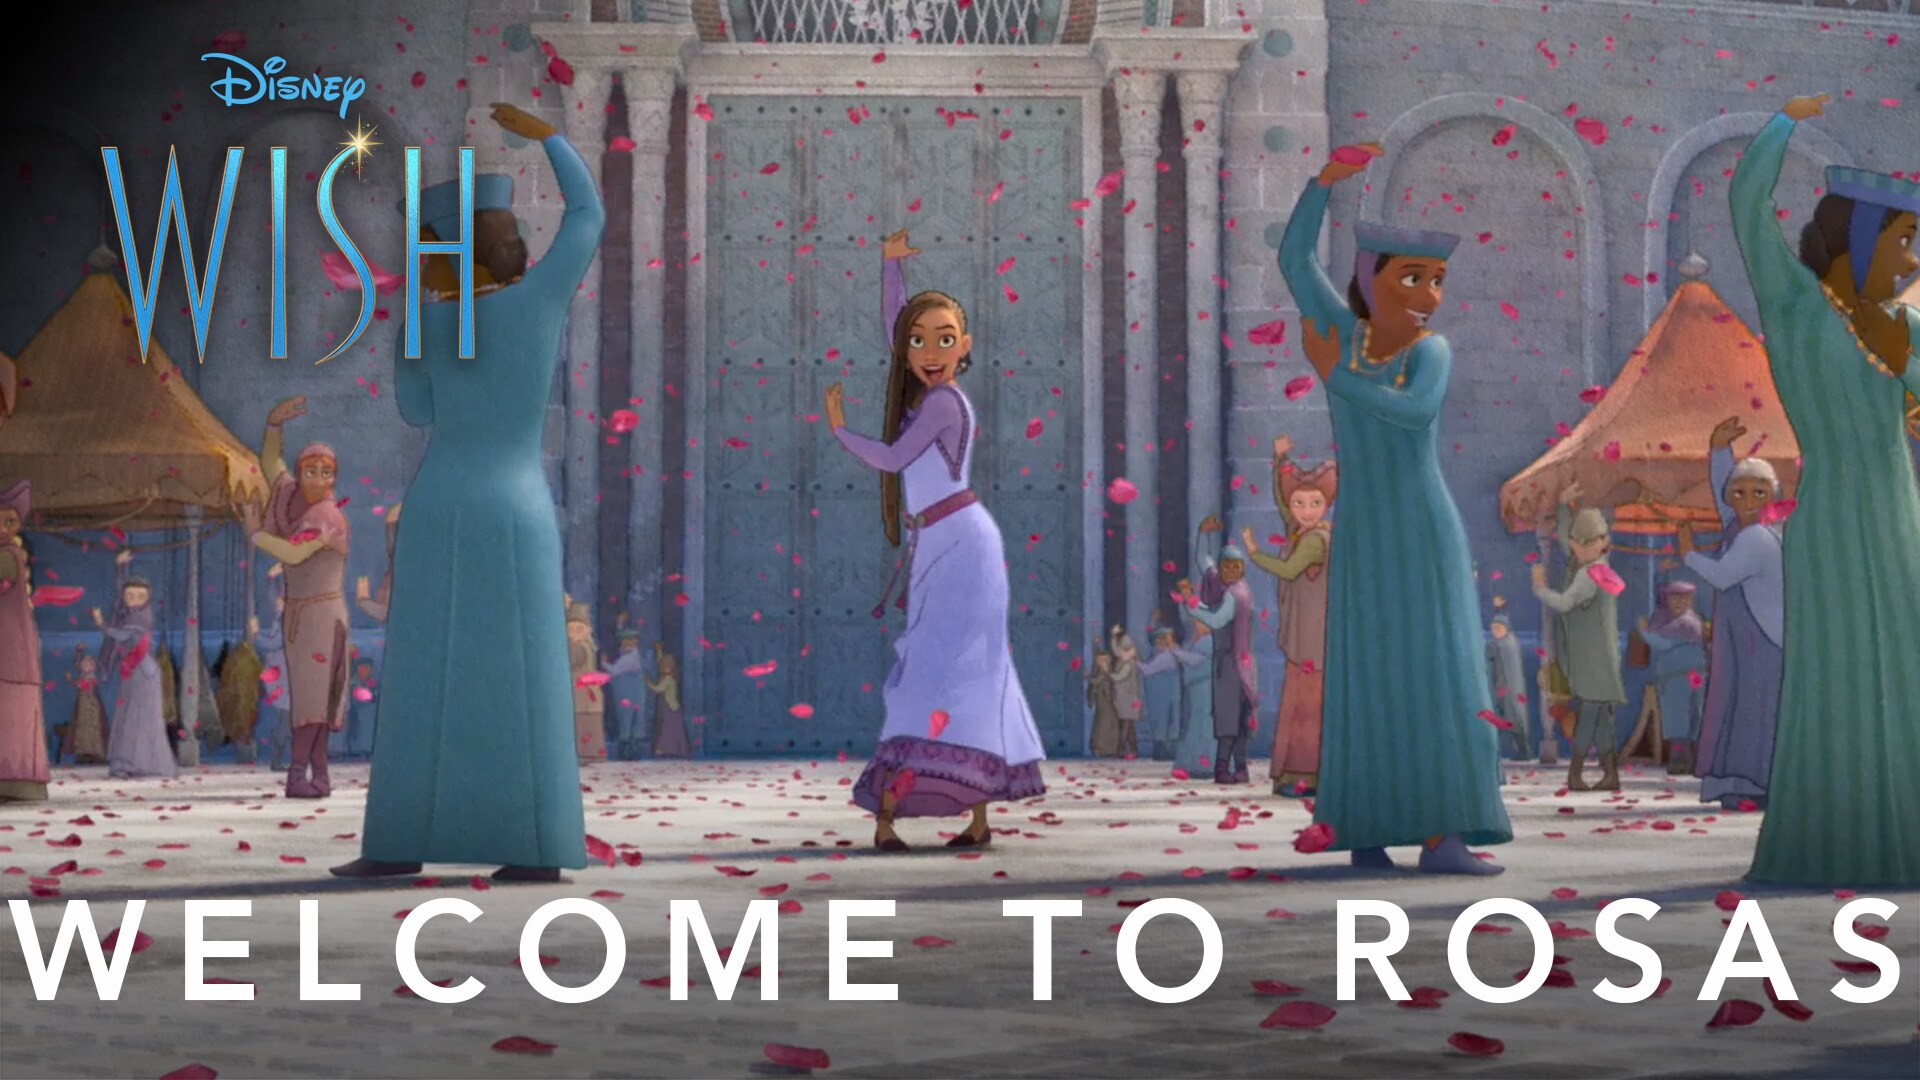 Disney’s Wish | "Welcome To Rosas"